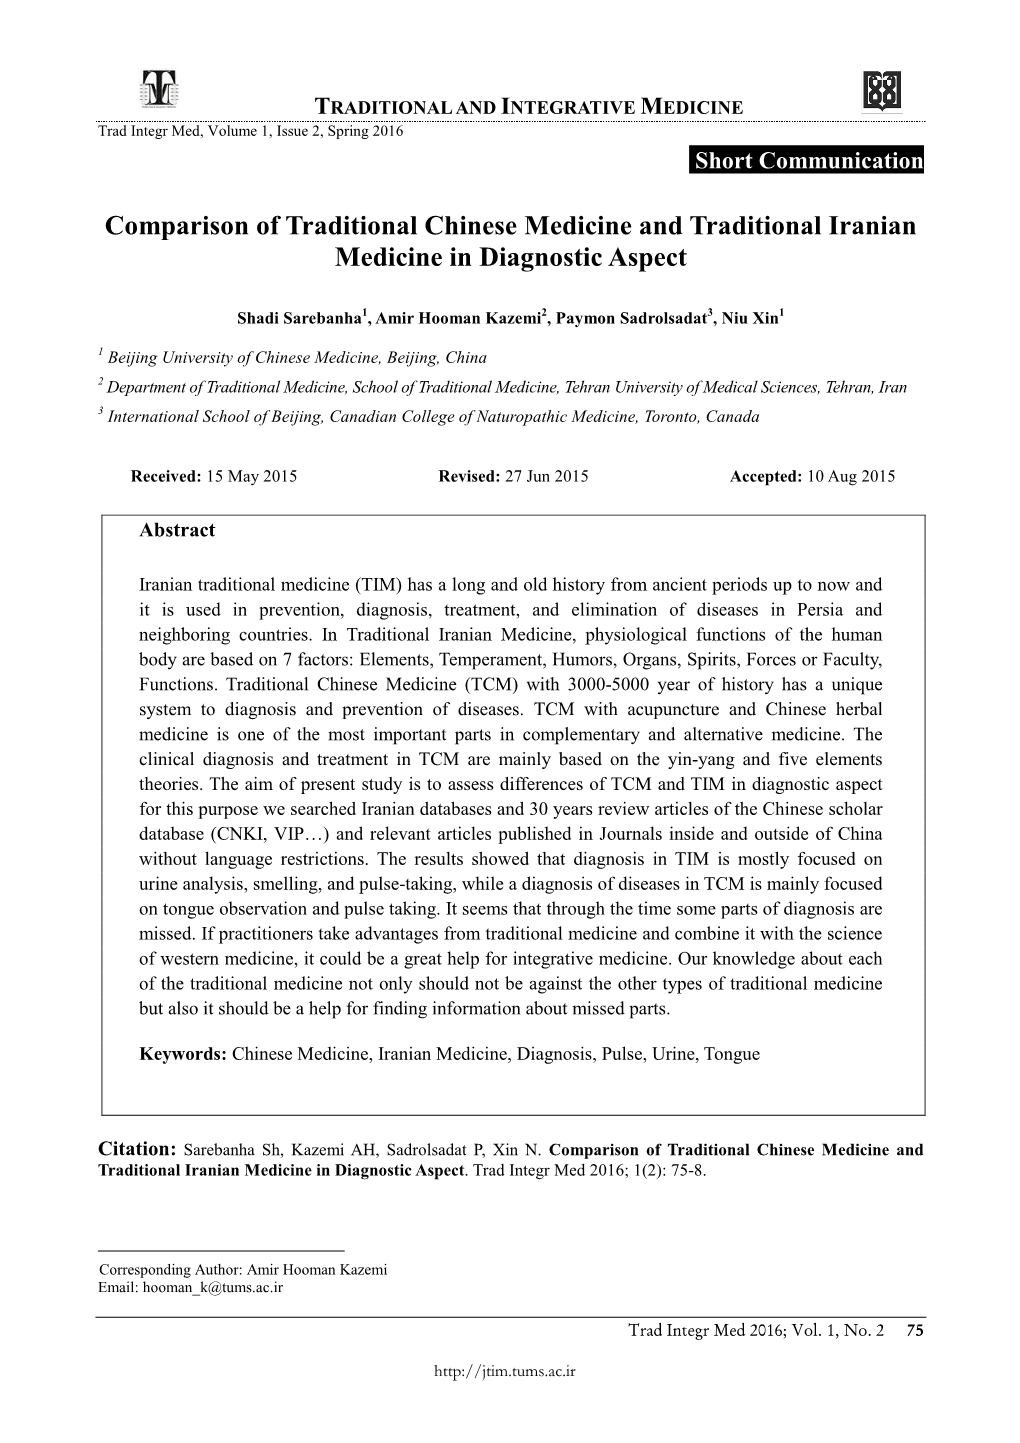 Comparison of Traditional Chinese Medicine and Traditional Iranian Medicine in Diagnostic Aspect